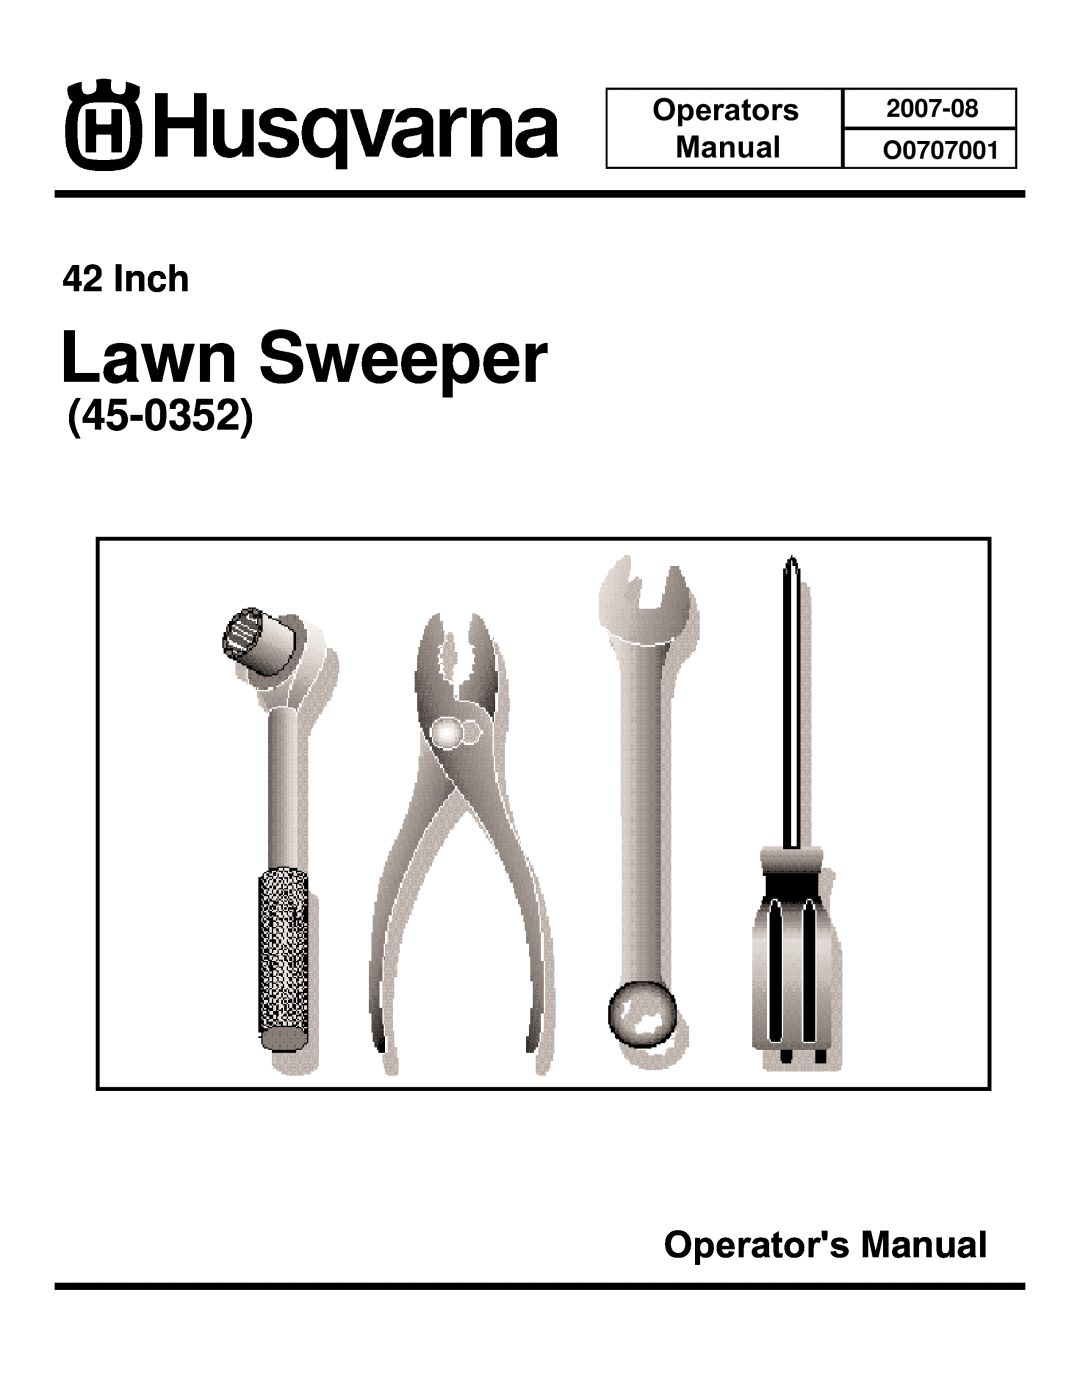 Husqvarna 45-0352 manual Lawn Sweeper, Inch, Operators Manual, 2007-08 O0707001 